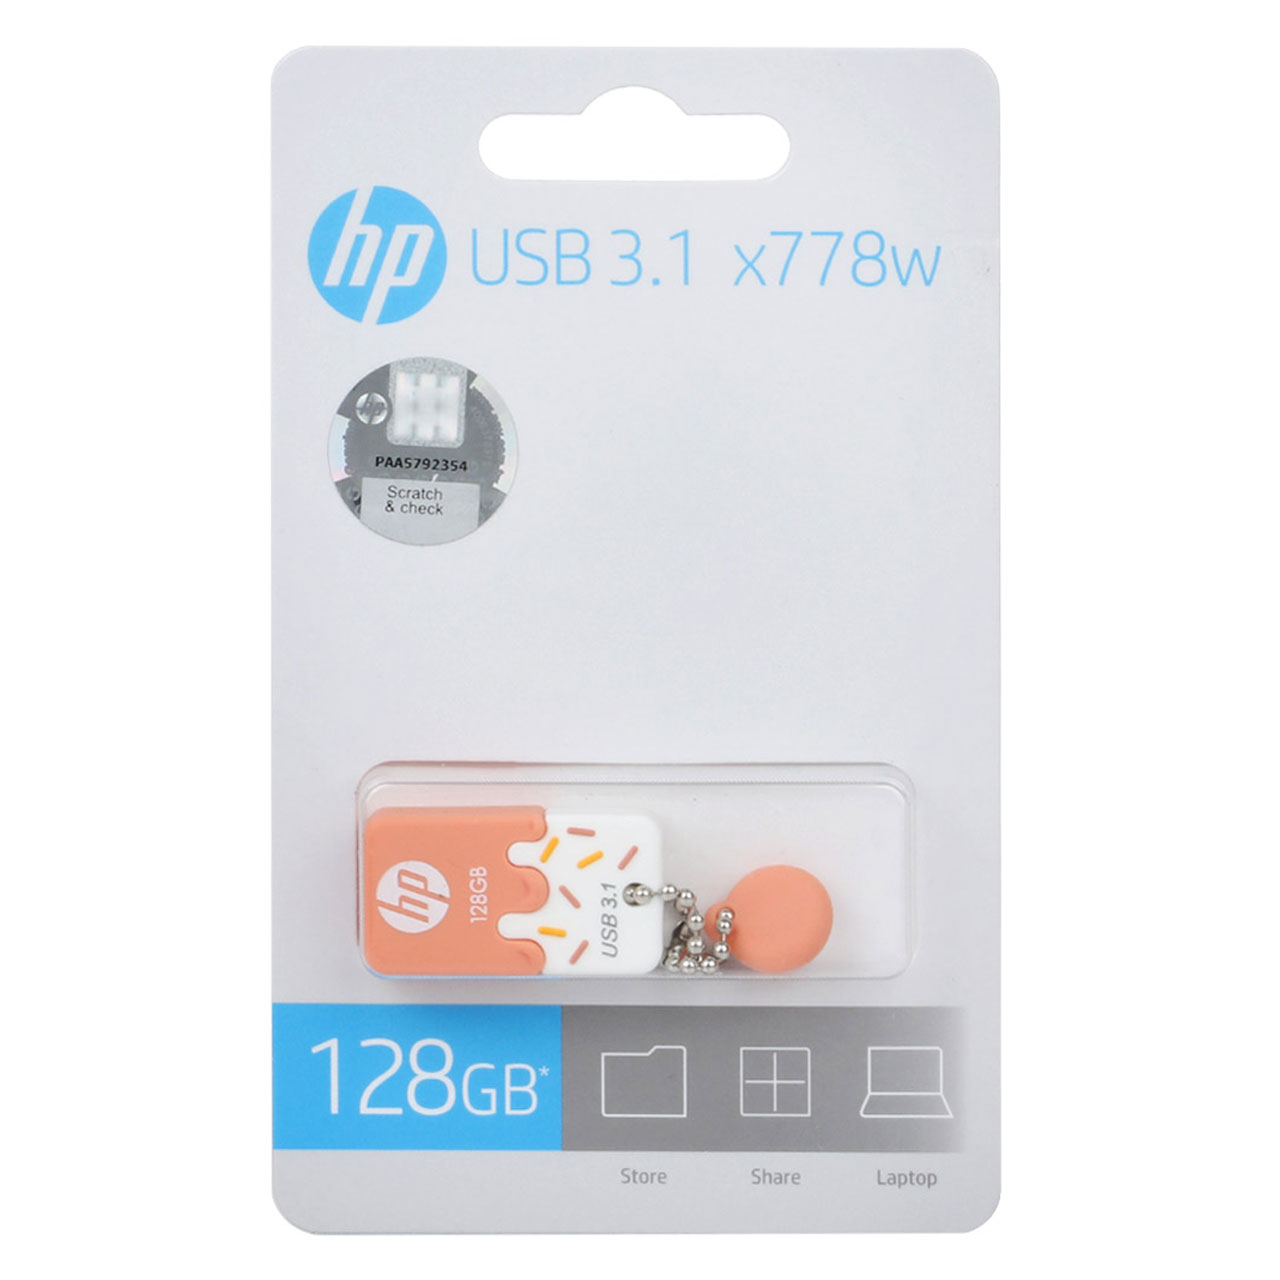 HP X778W USB3.1 Flash Memory - 128GB (دو ساله سورین)گلبهی